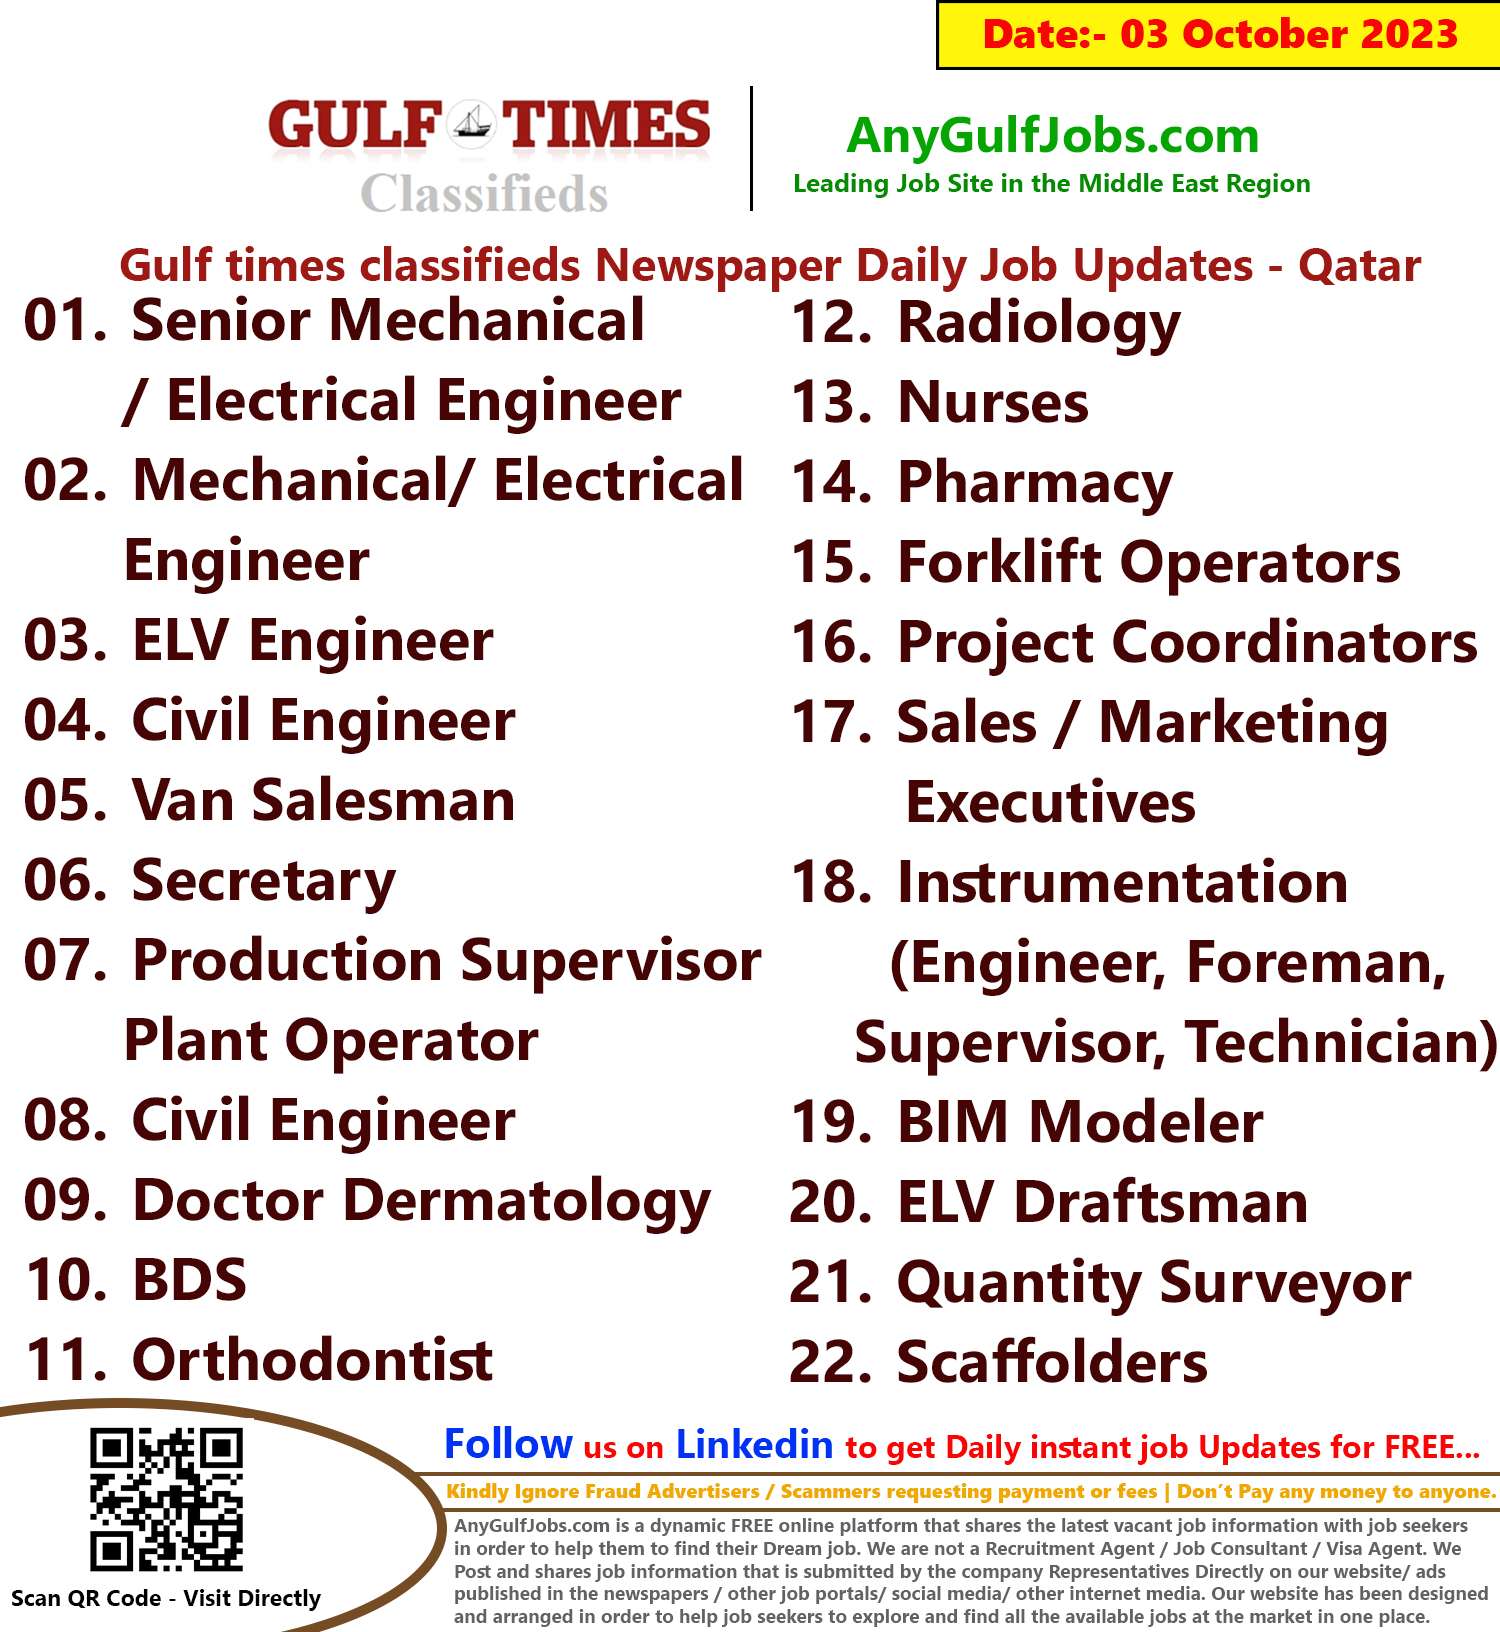 Gulf times classifieds Job Vacancies Qatar - 03 October 2023